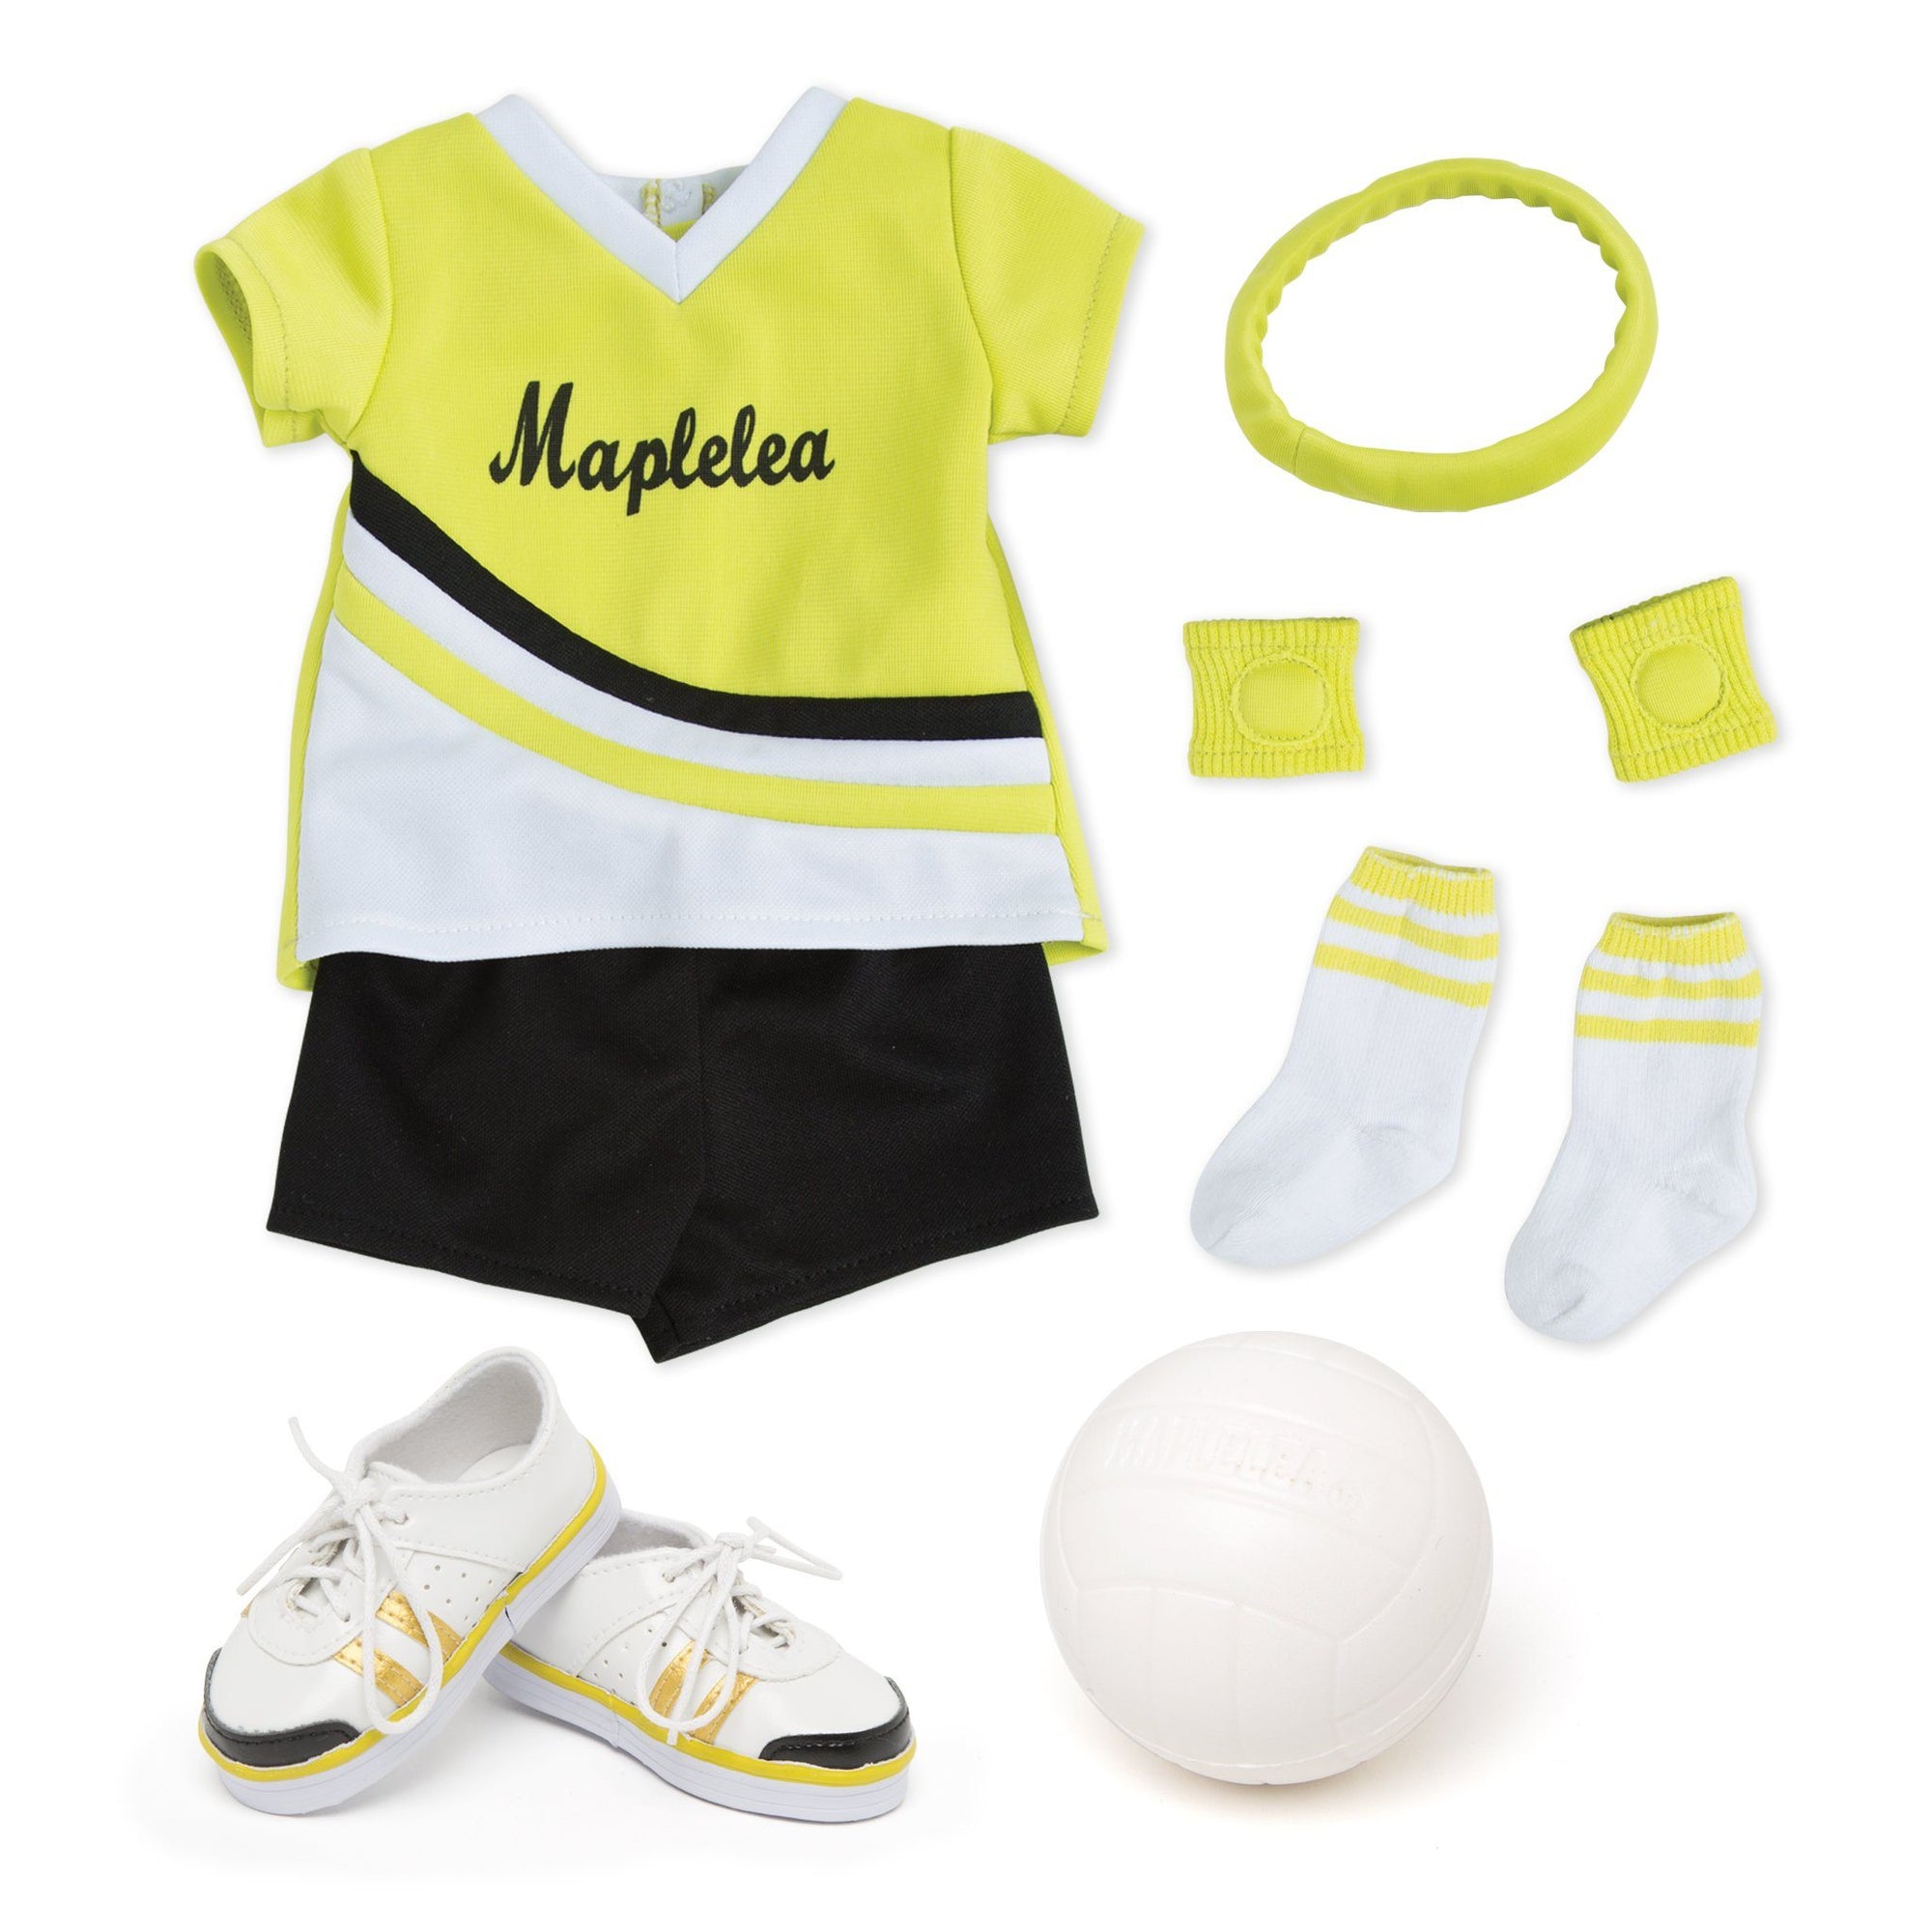 Serve, Set, Spike Volleyball Uniform and Ball